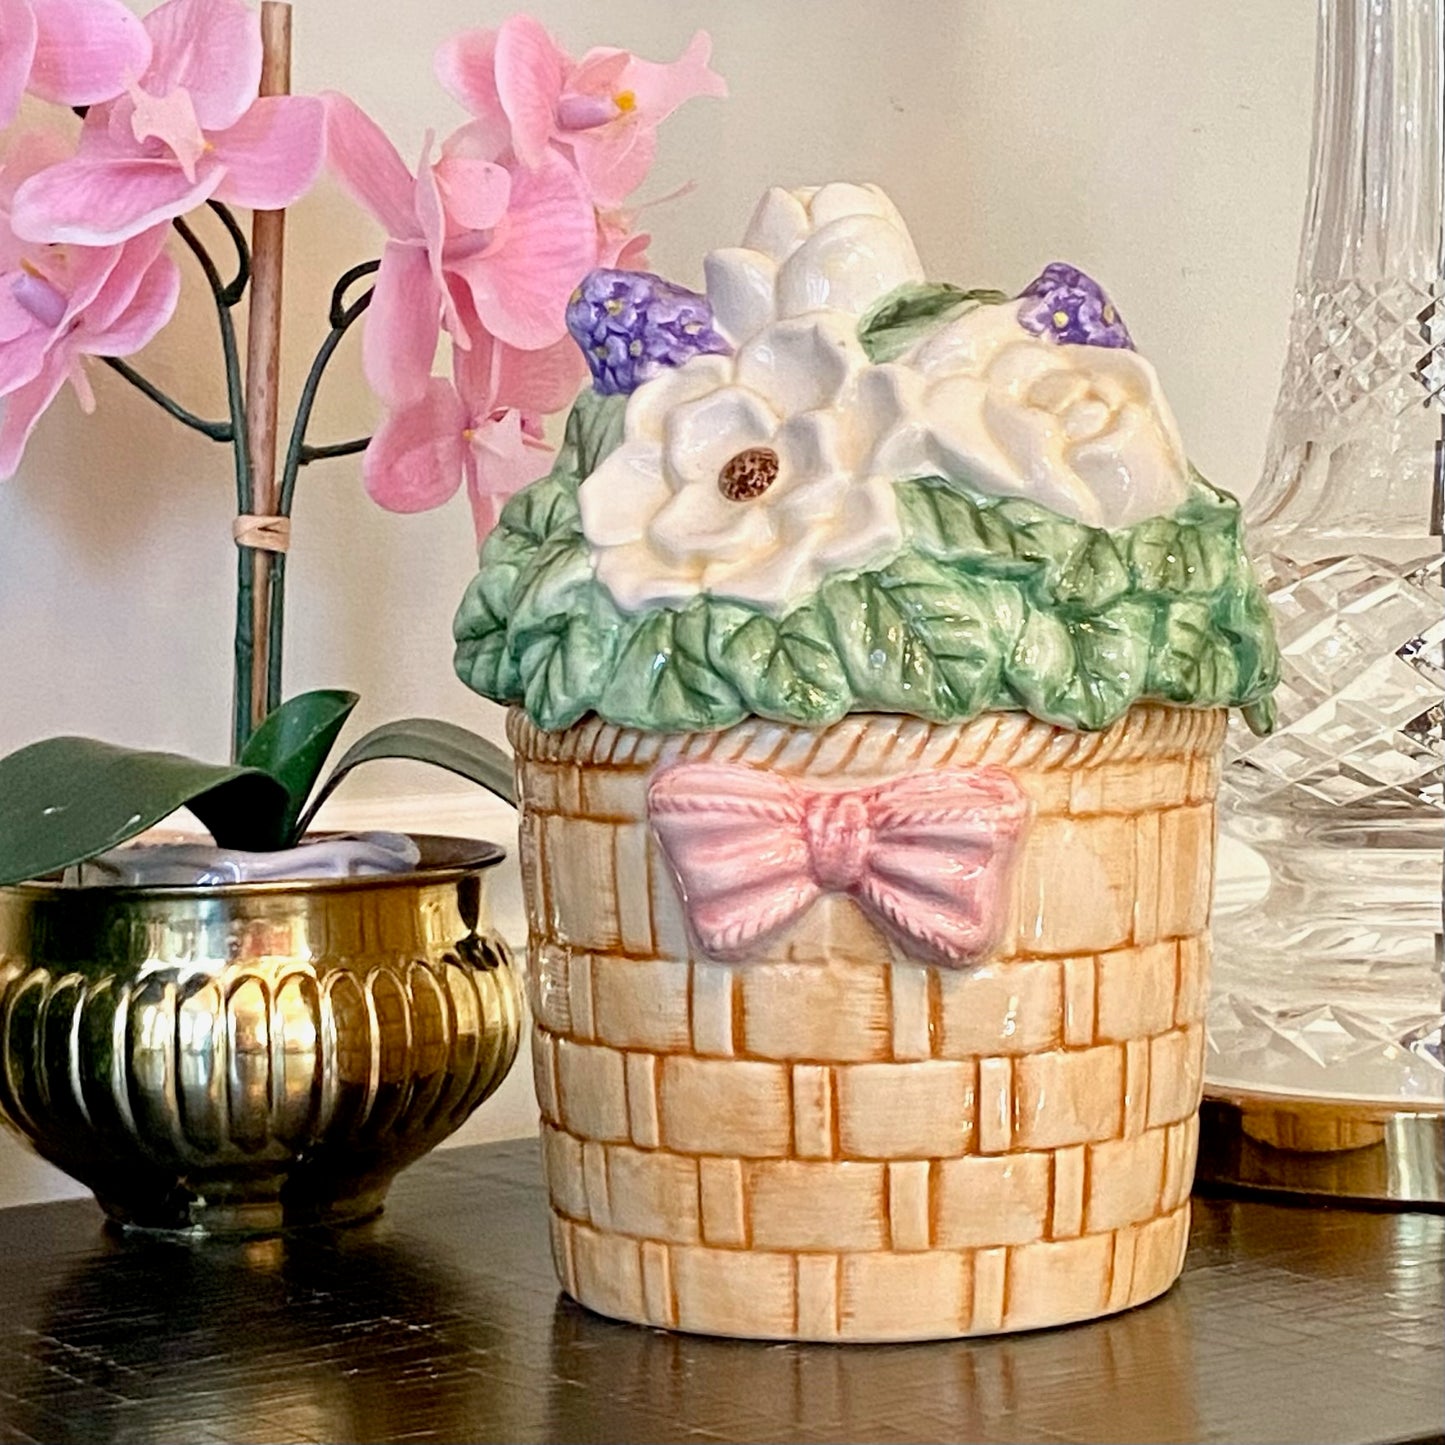 Whimsical vintage basketweave floral large cookie jar centerpiece.